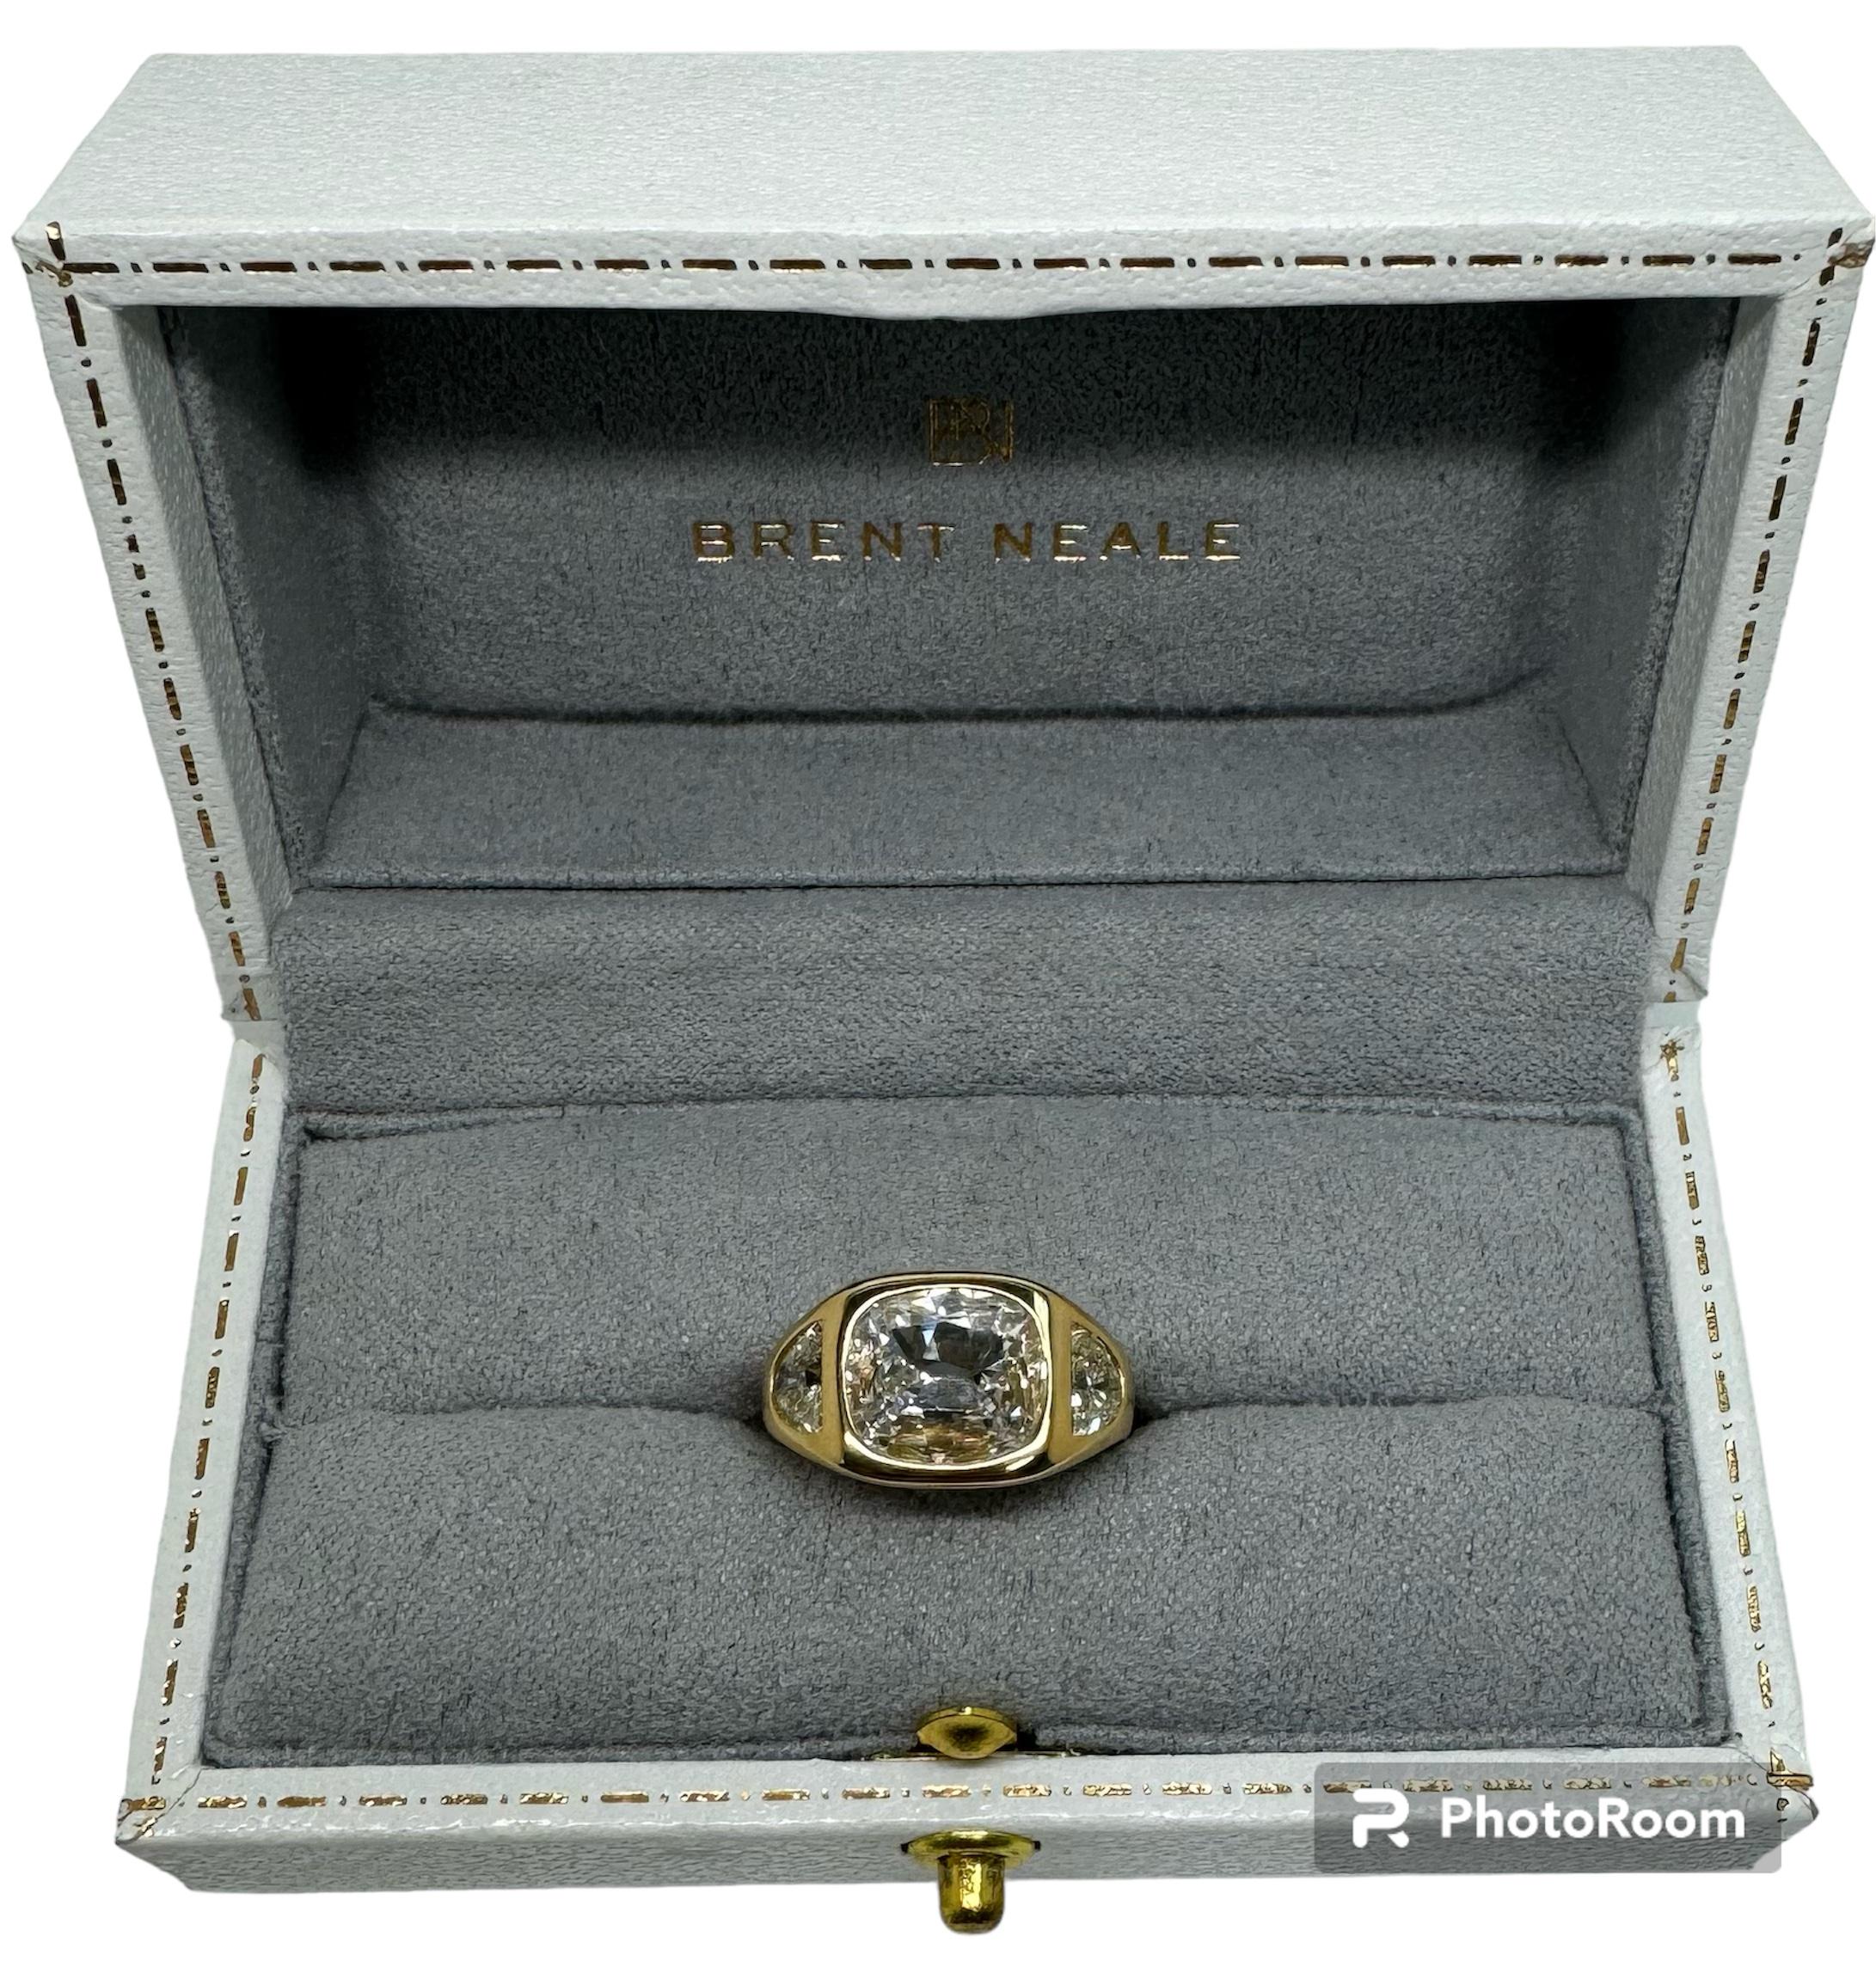 Contemporary Brent Neale 2.44 Carat Cushion Brilliant Cut Diamond Engagement Ring